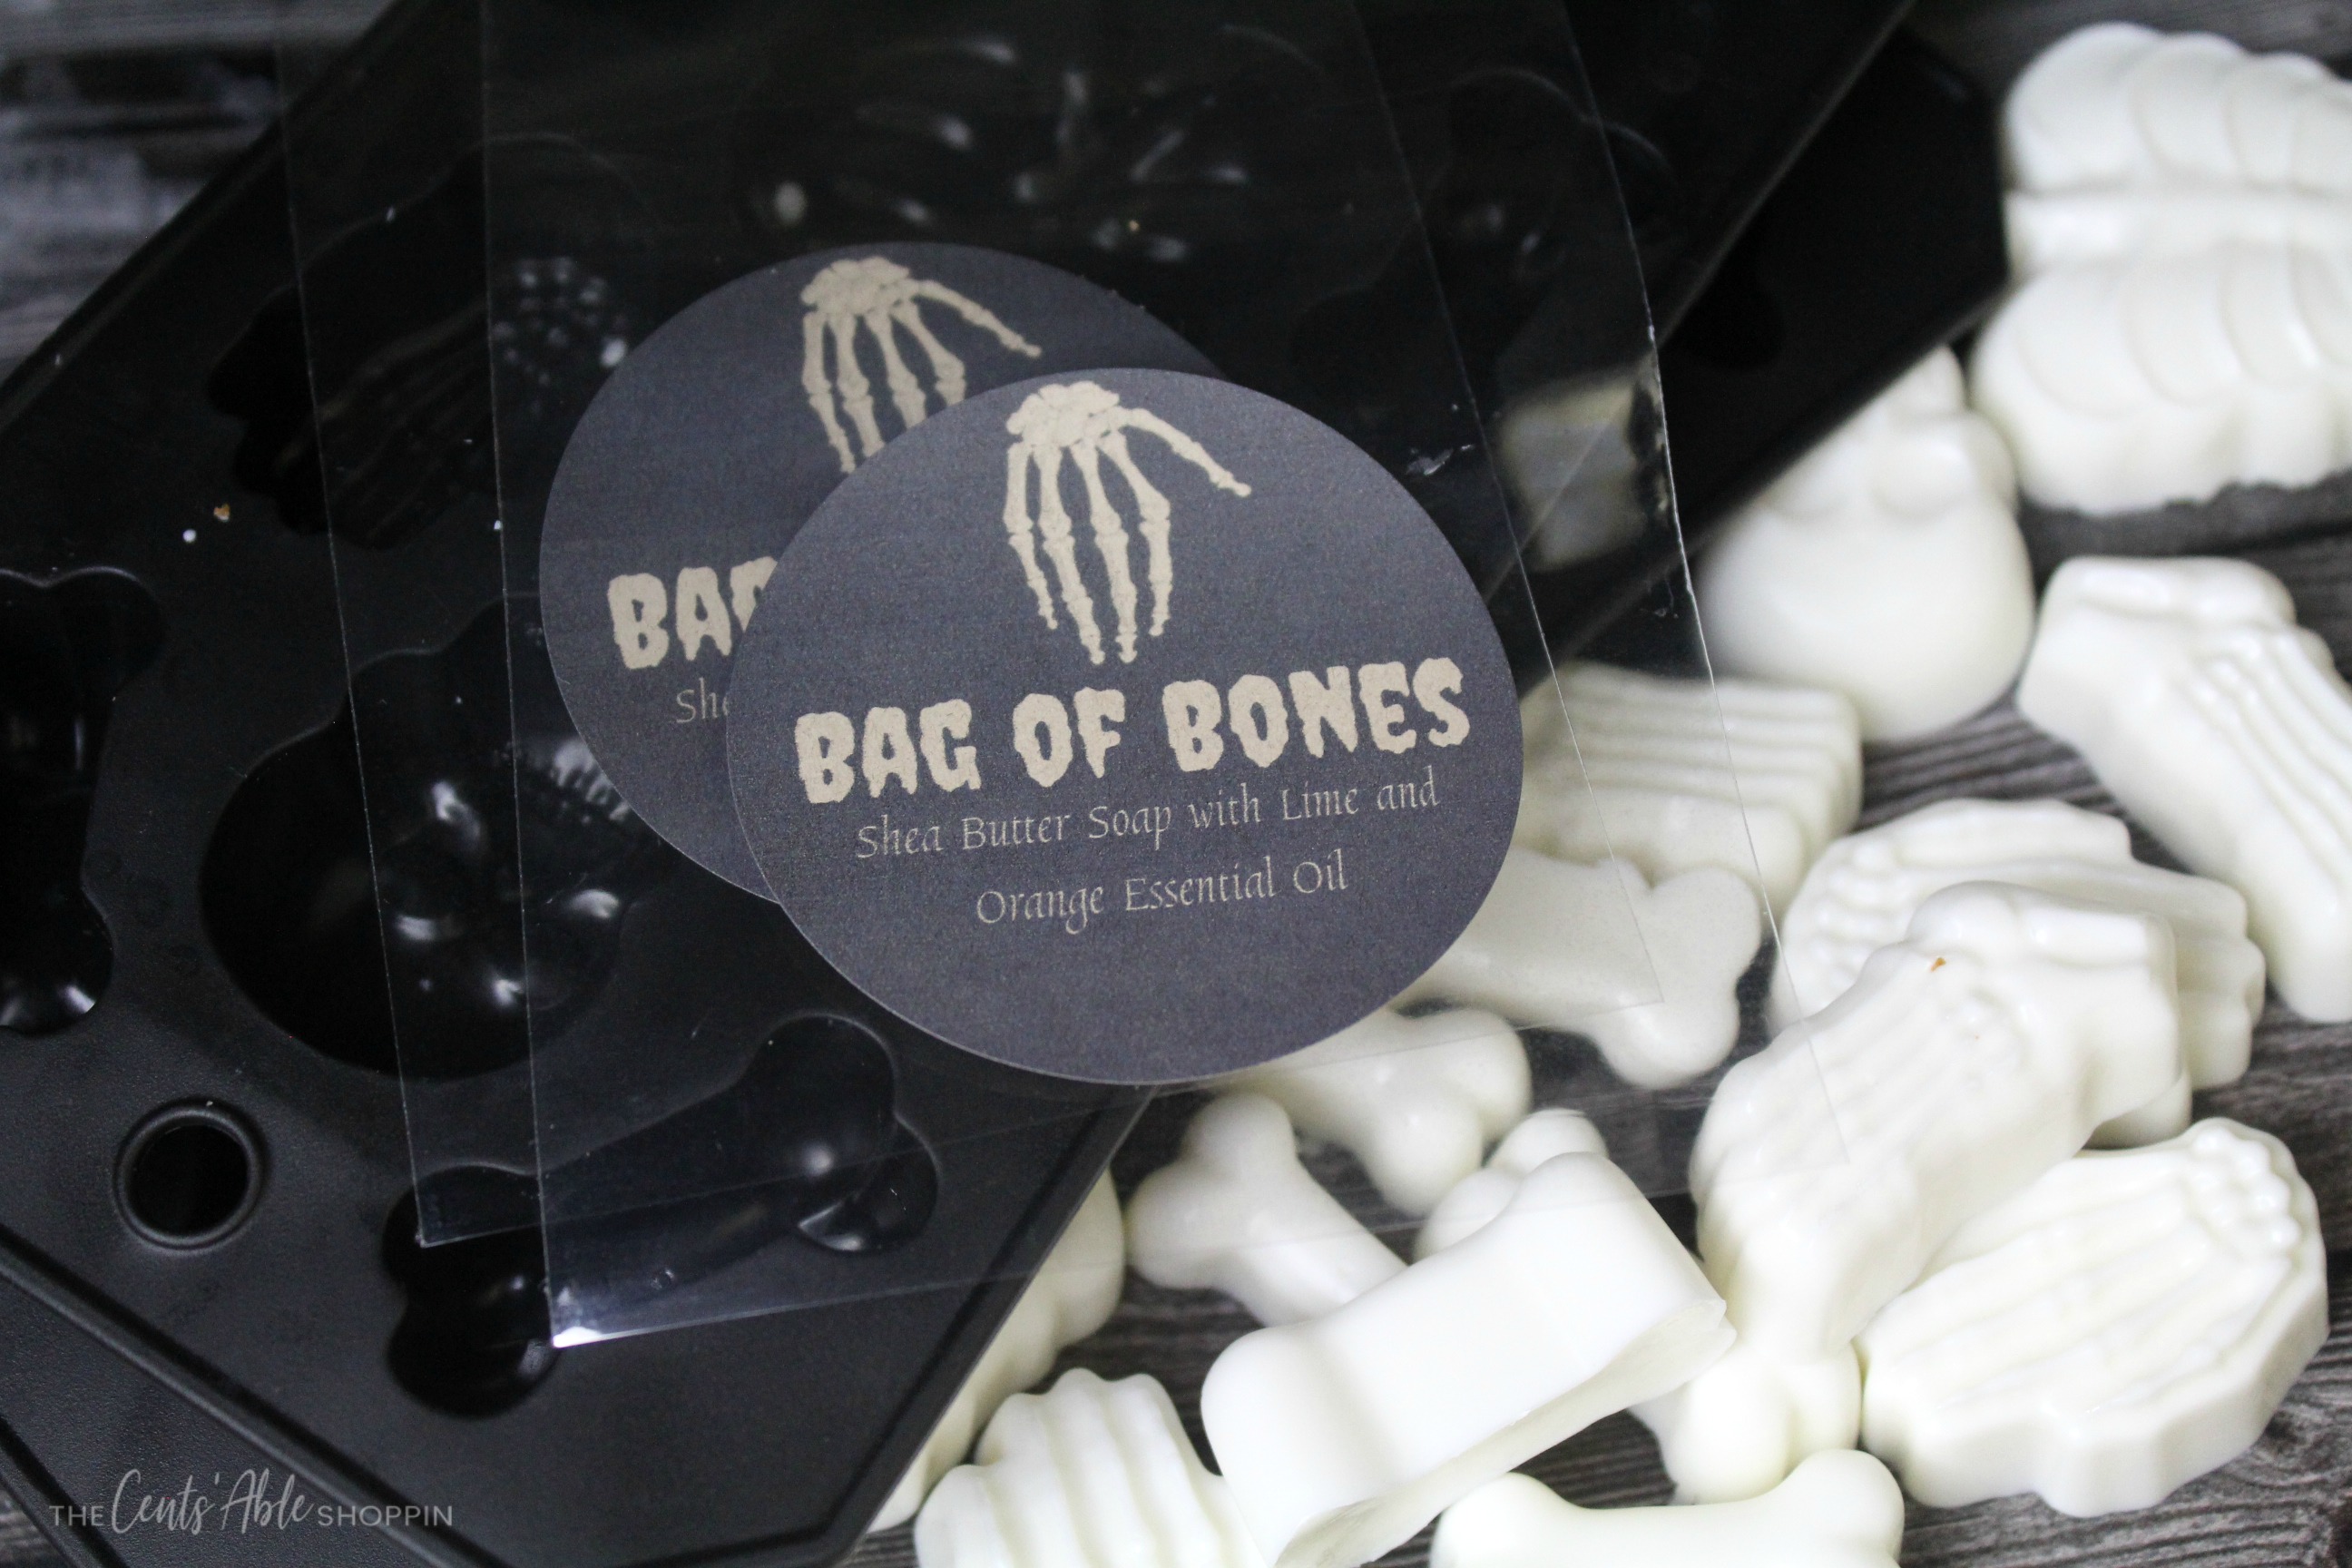 Halloween Bag of Bones Soap Favors